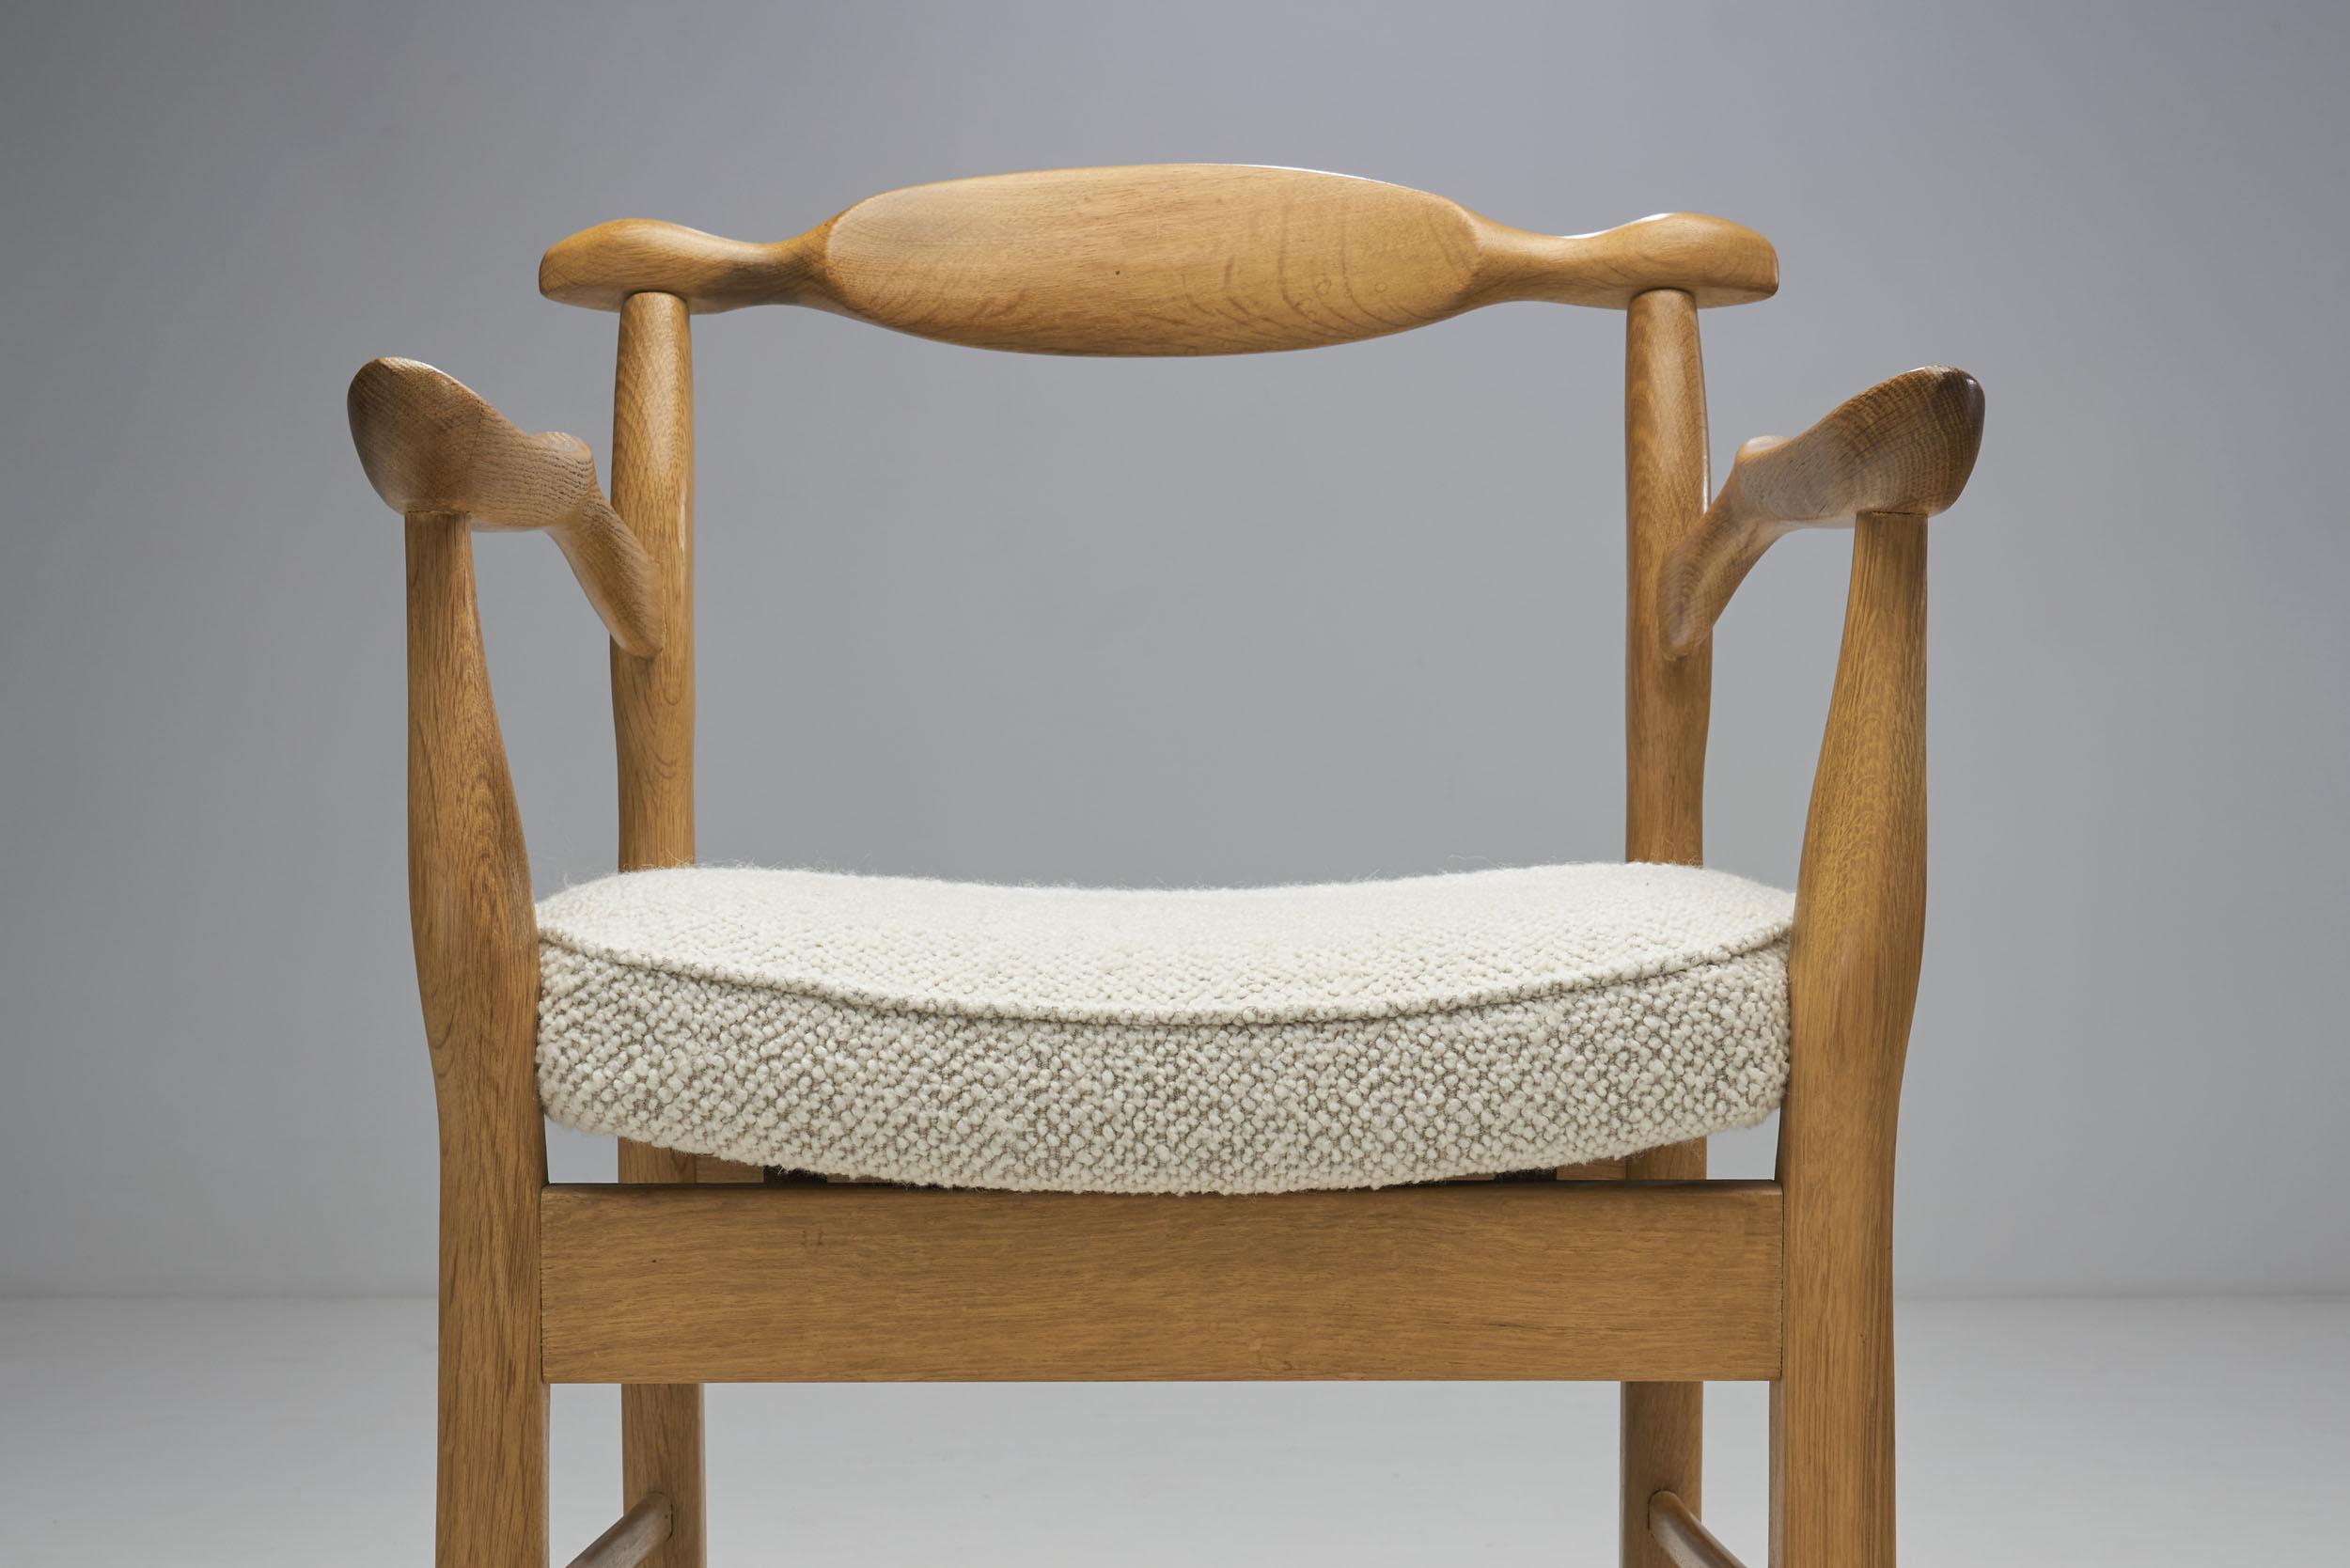 Fabric Guillerme et Chambron “Bridge Fumay” Dining Chair for Votre Maison, France 1960s